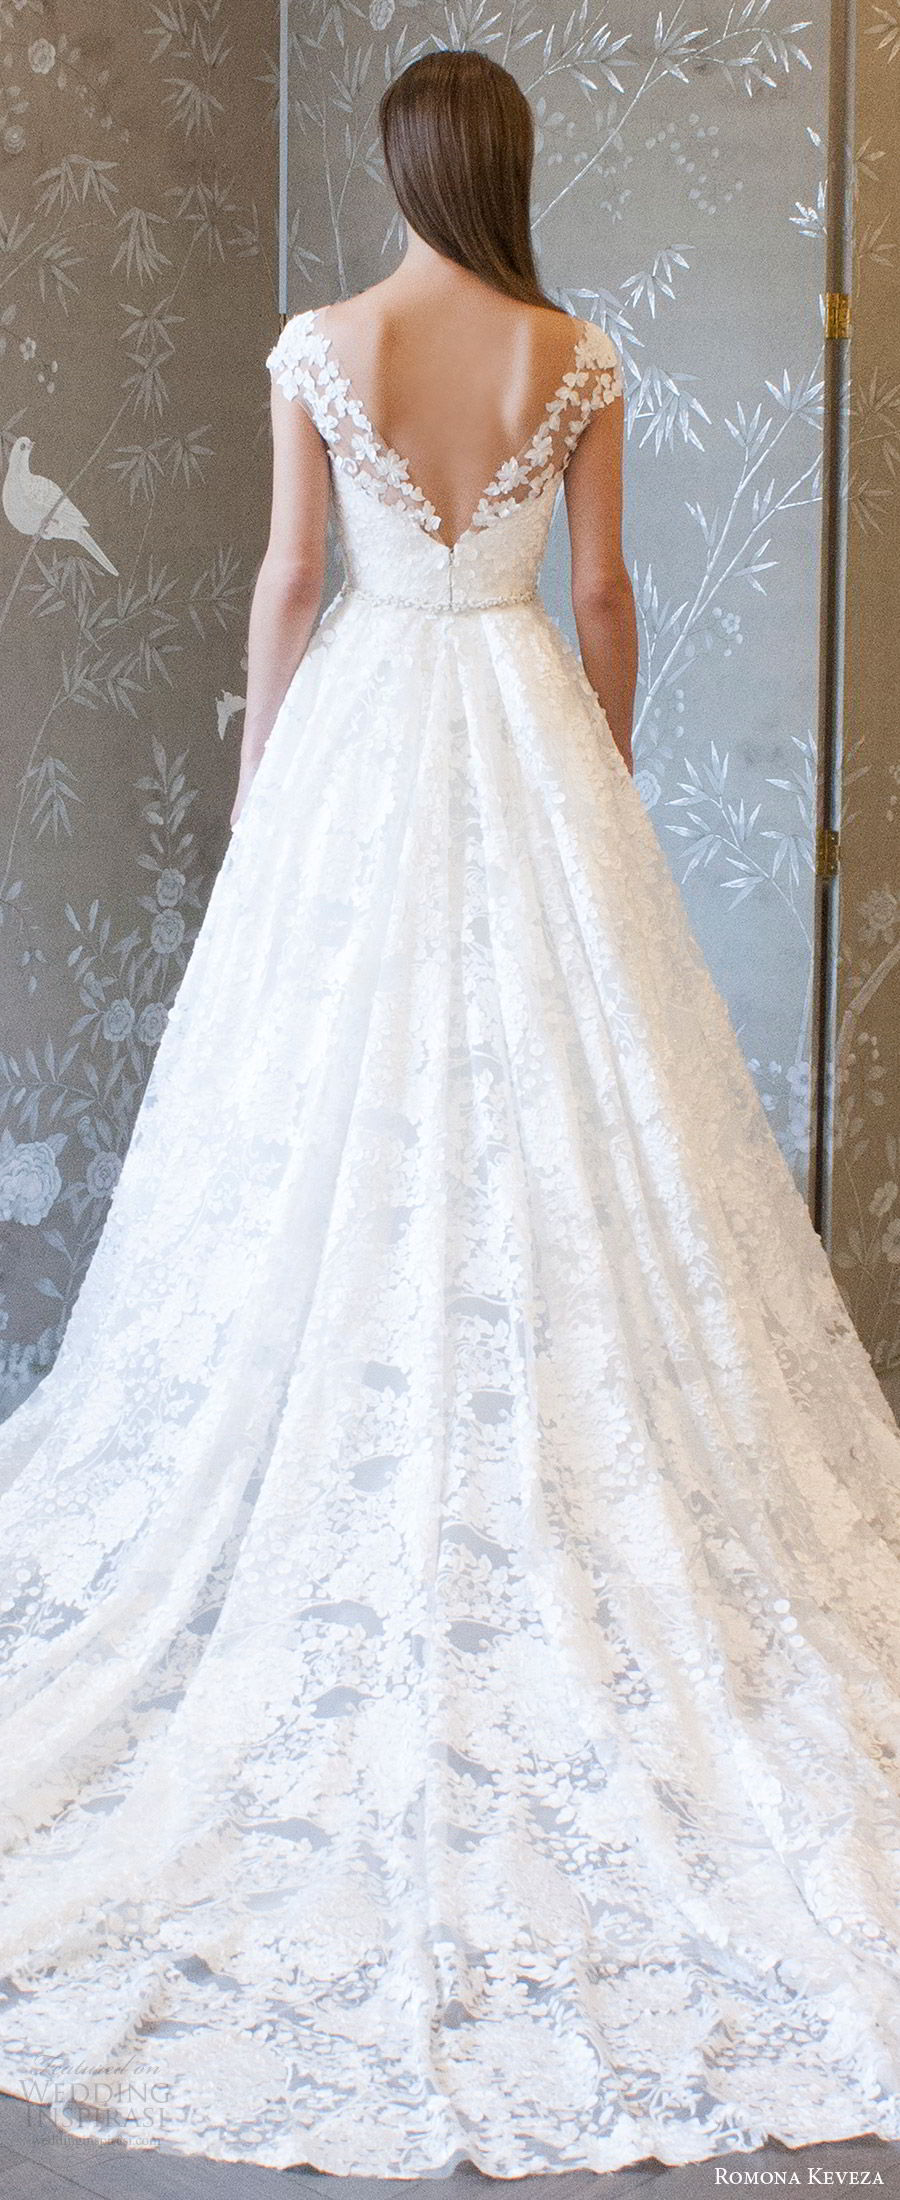 romona keveza spring 2018 bridal cap sleeves split sweetheart neckline lace sheath wedding dress (rk8409) zbv romantic elegant detachable a line cathedral train